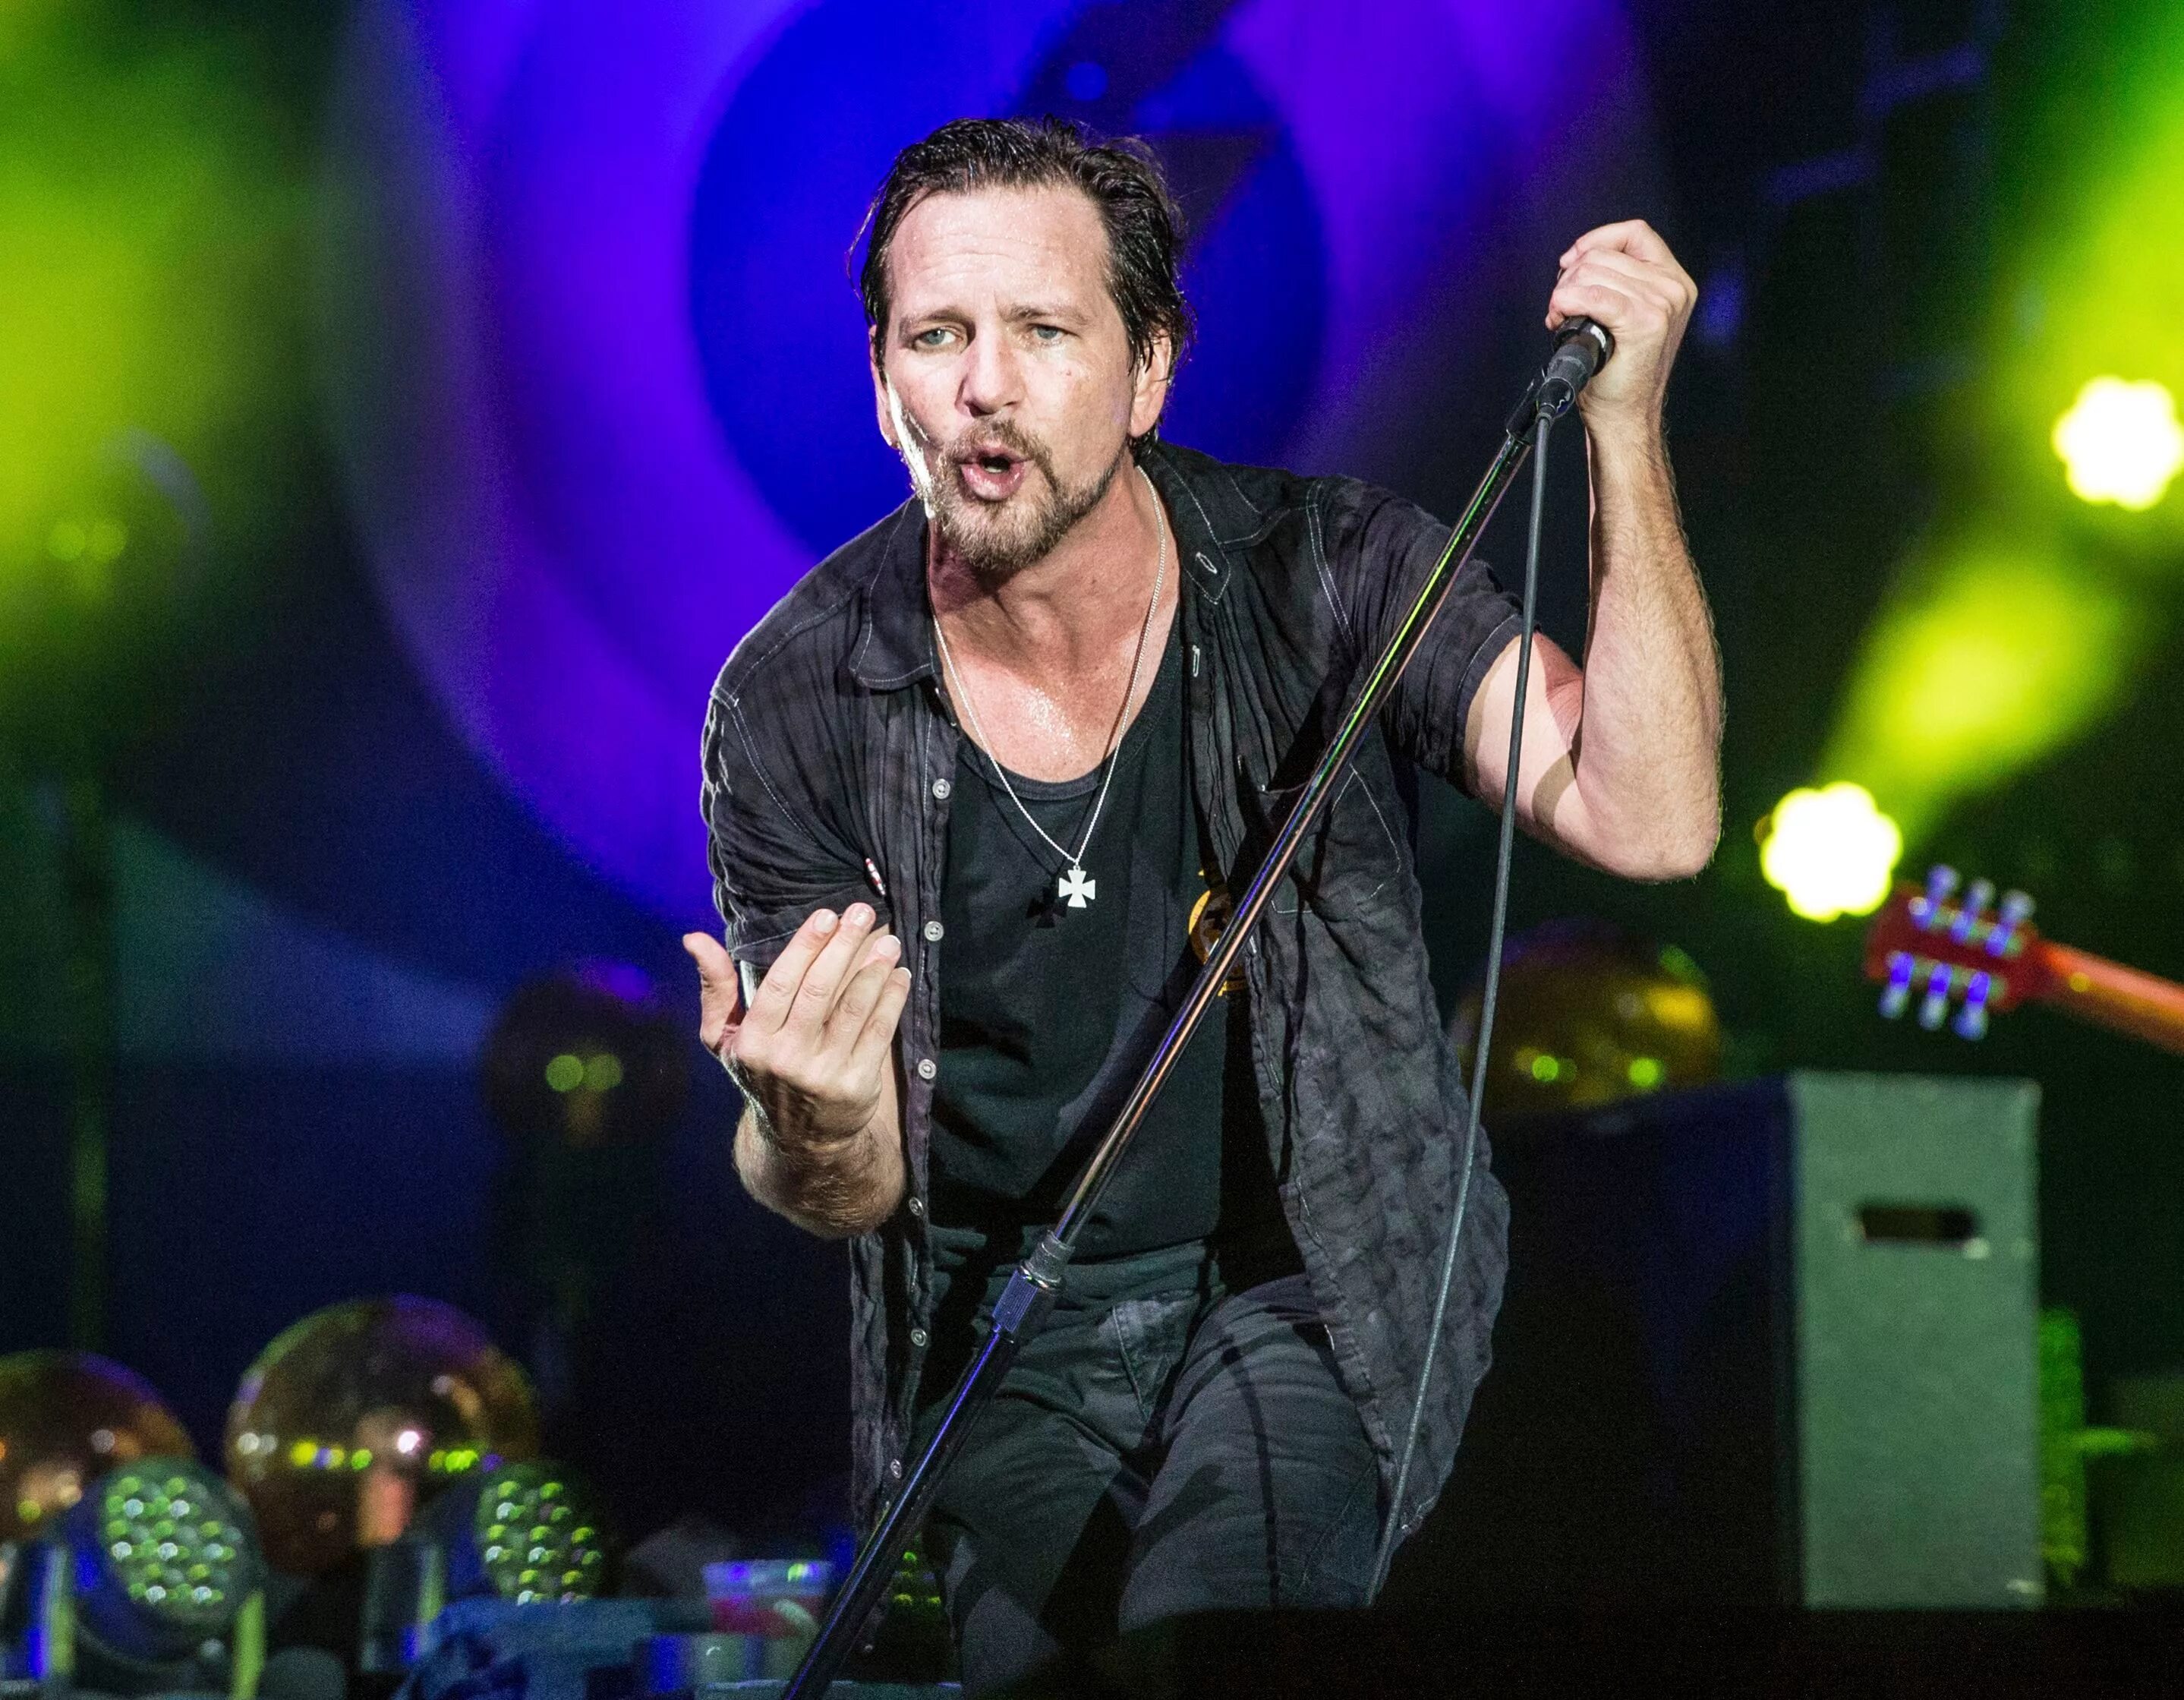 Вокалист в группу. Эдди Веддер. Группа Pearl Jam. Pearl Jam вокалист. Pearl Jam "Gigaton".